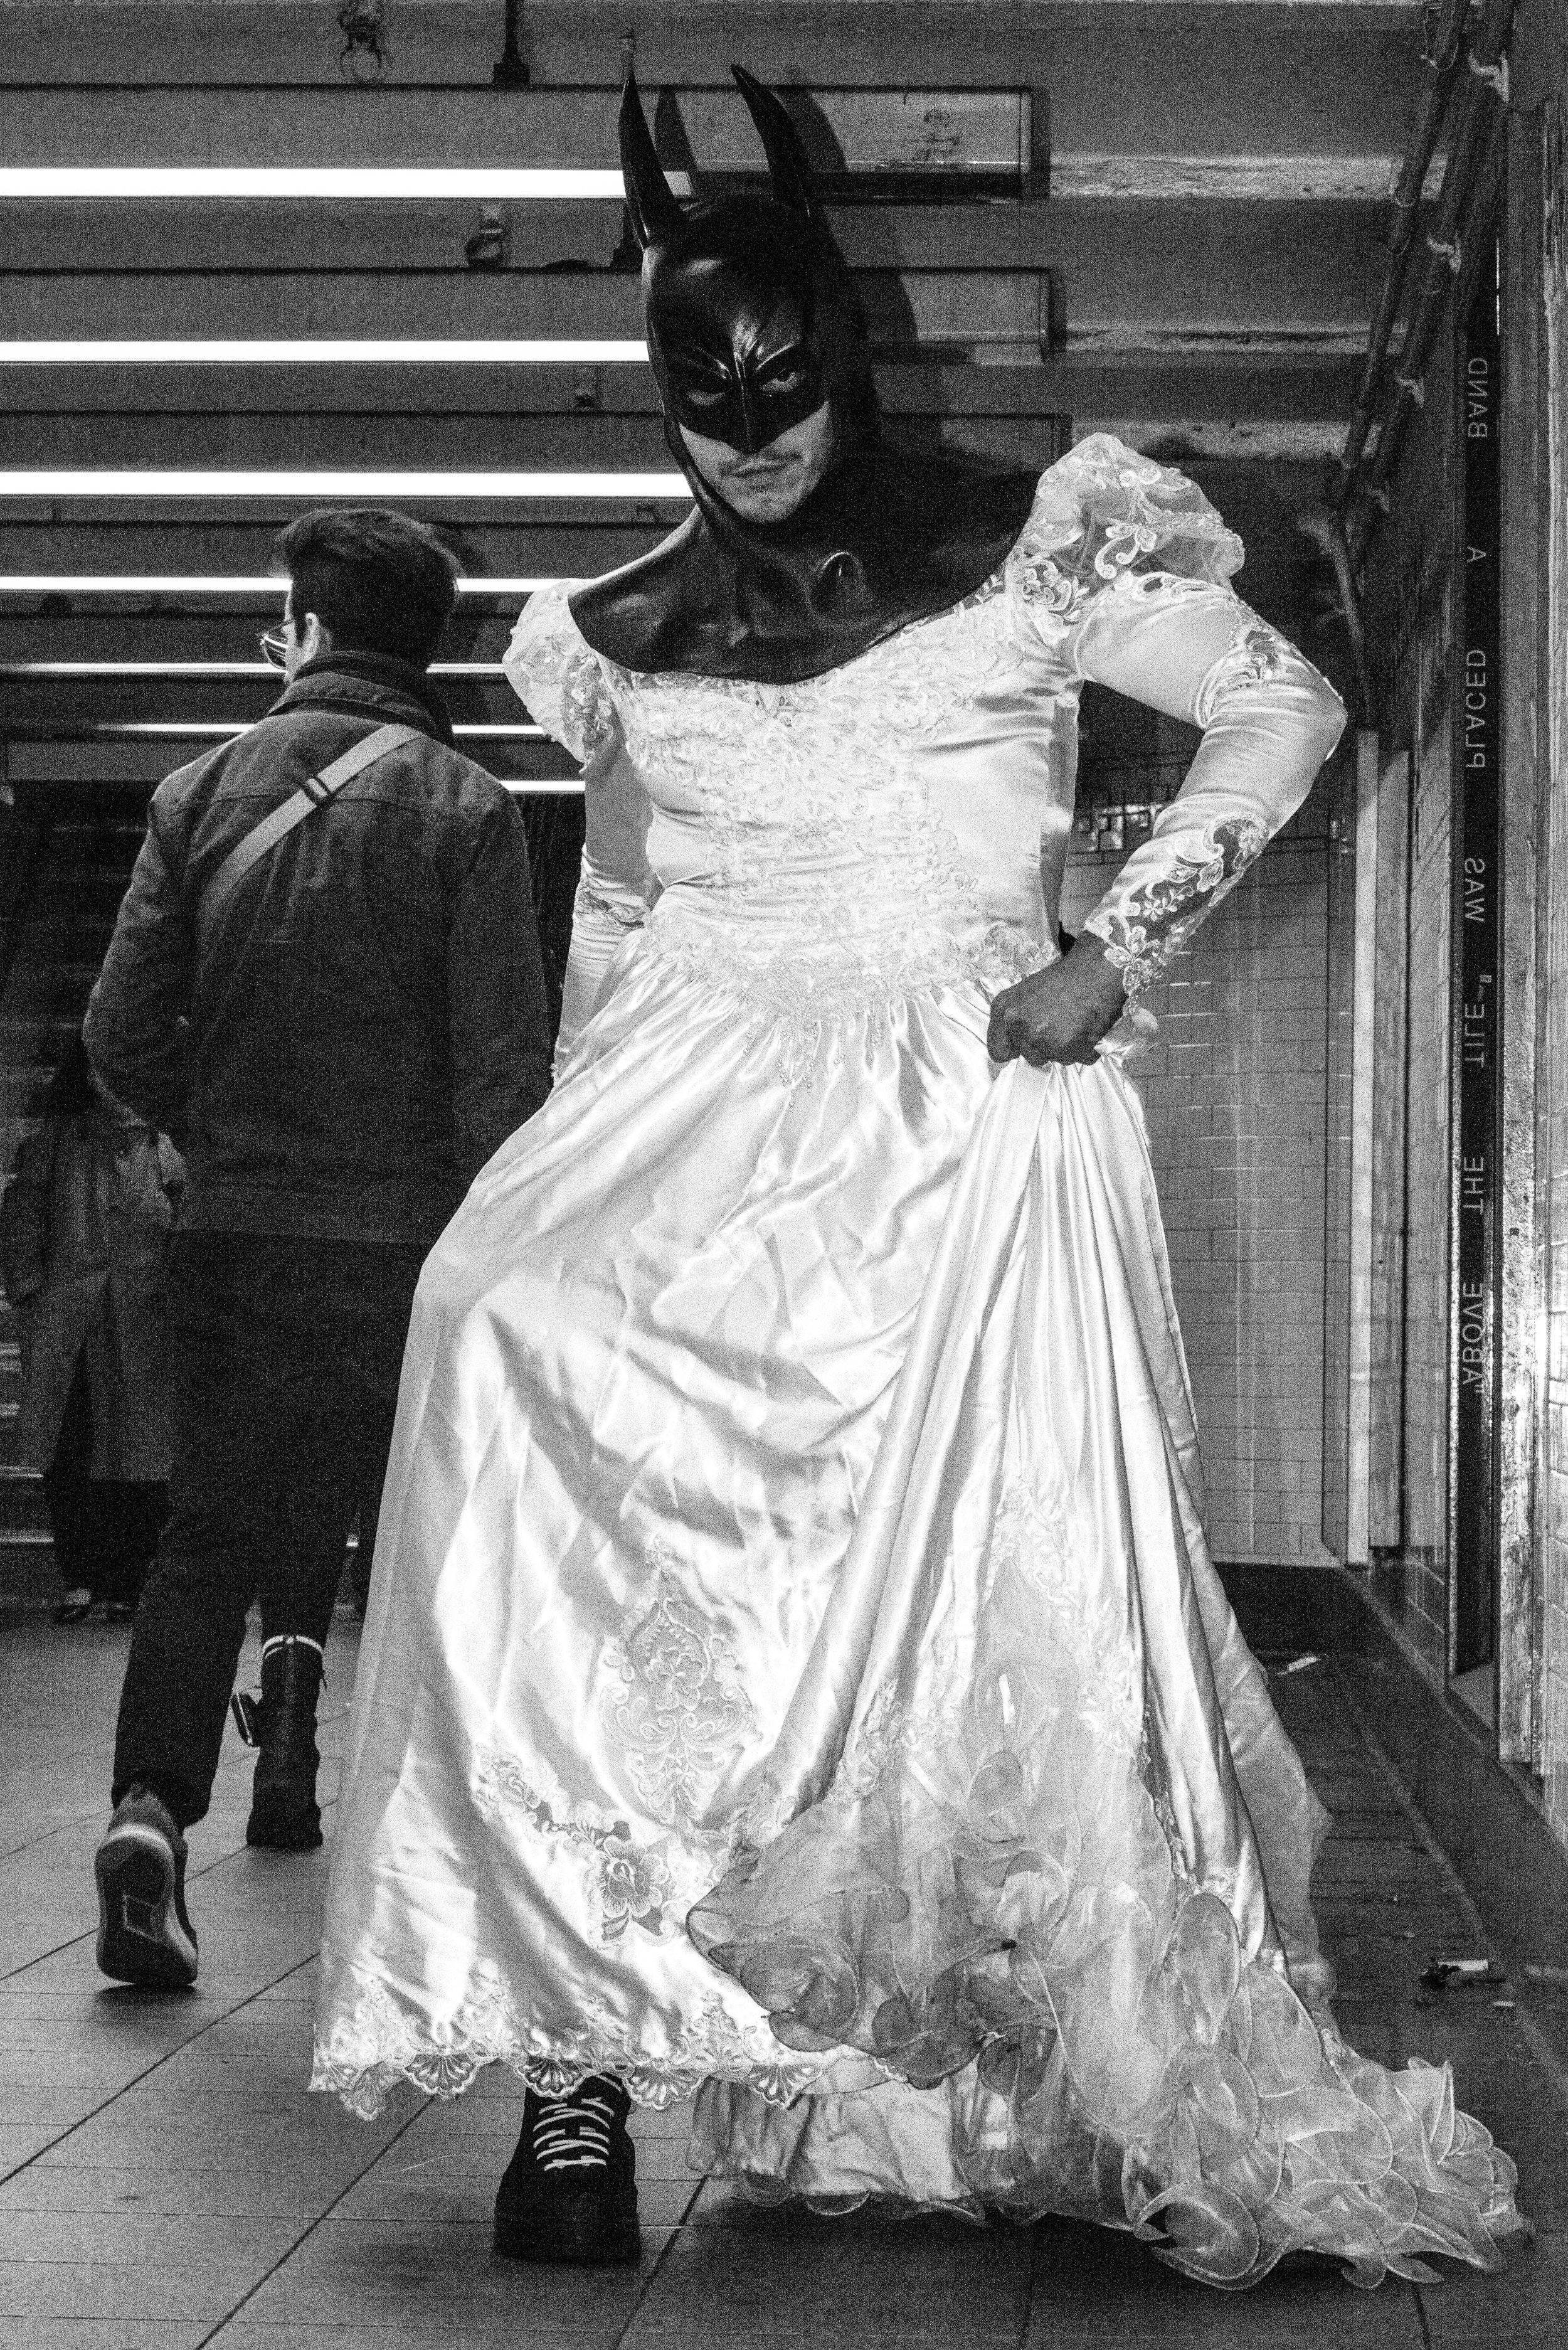 Batman in Dress Subway Pose B&W Halloween NYC.jpg